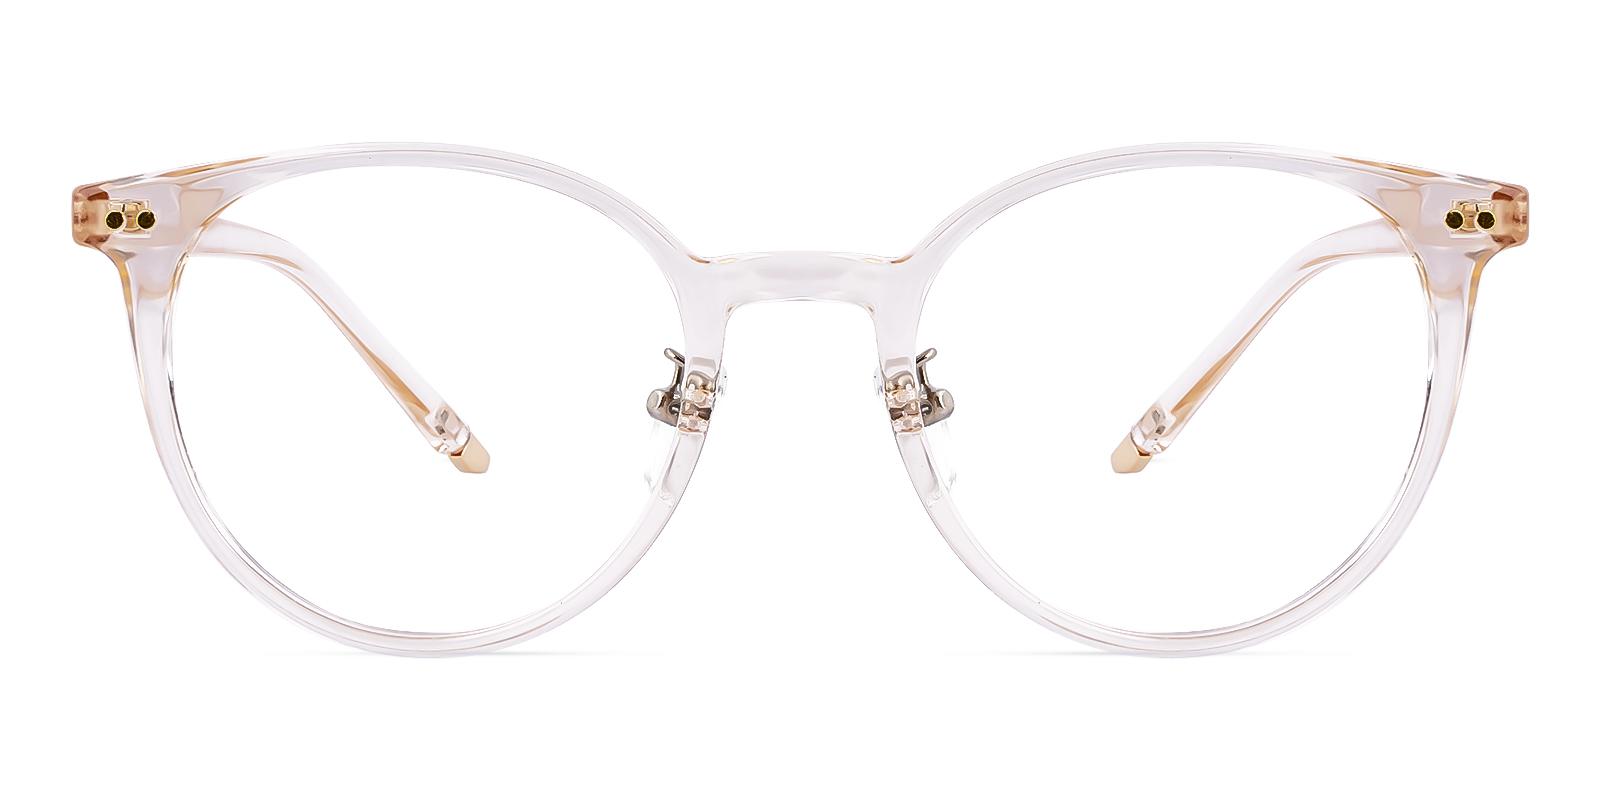 Candeous Orange Plastic Eyeglasses , NosePads Frames from ABBE Glasses